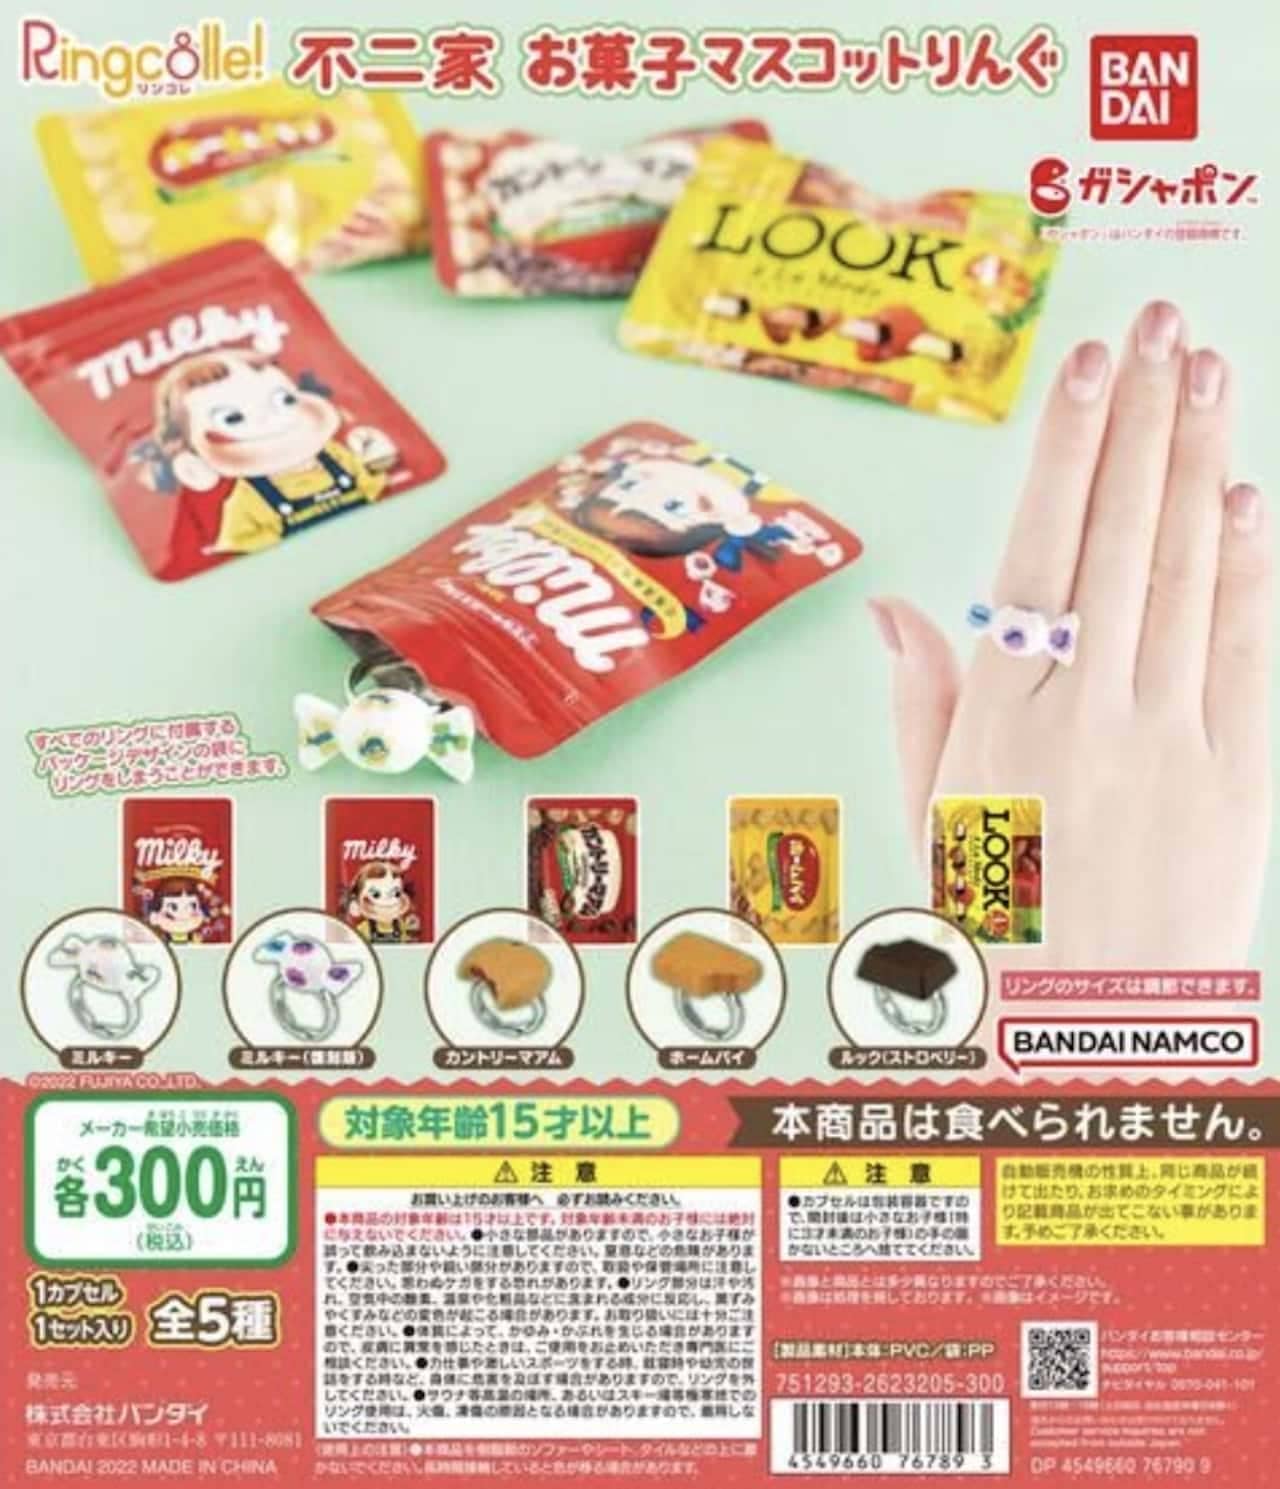 Gacha Gacha "Ringcolle! Fujiya Confectionery Mascot Ringu".